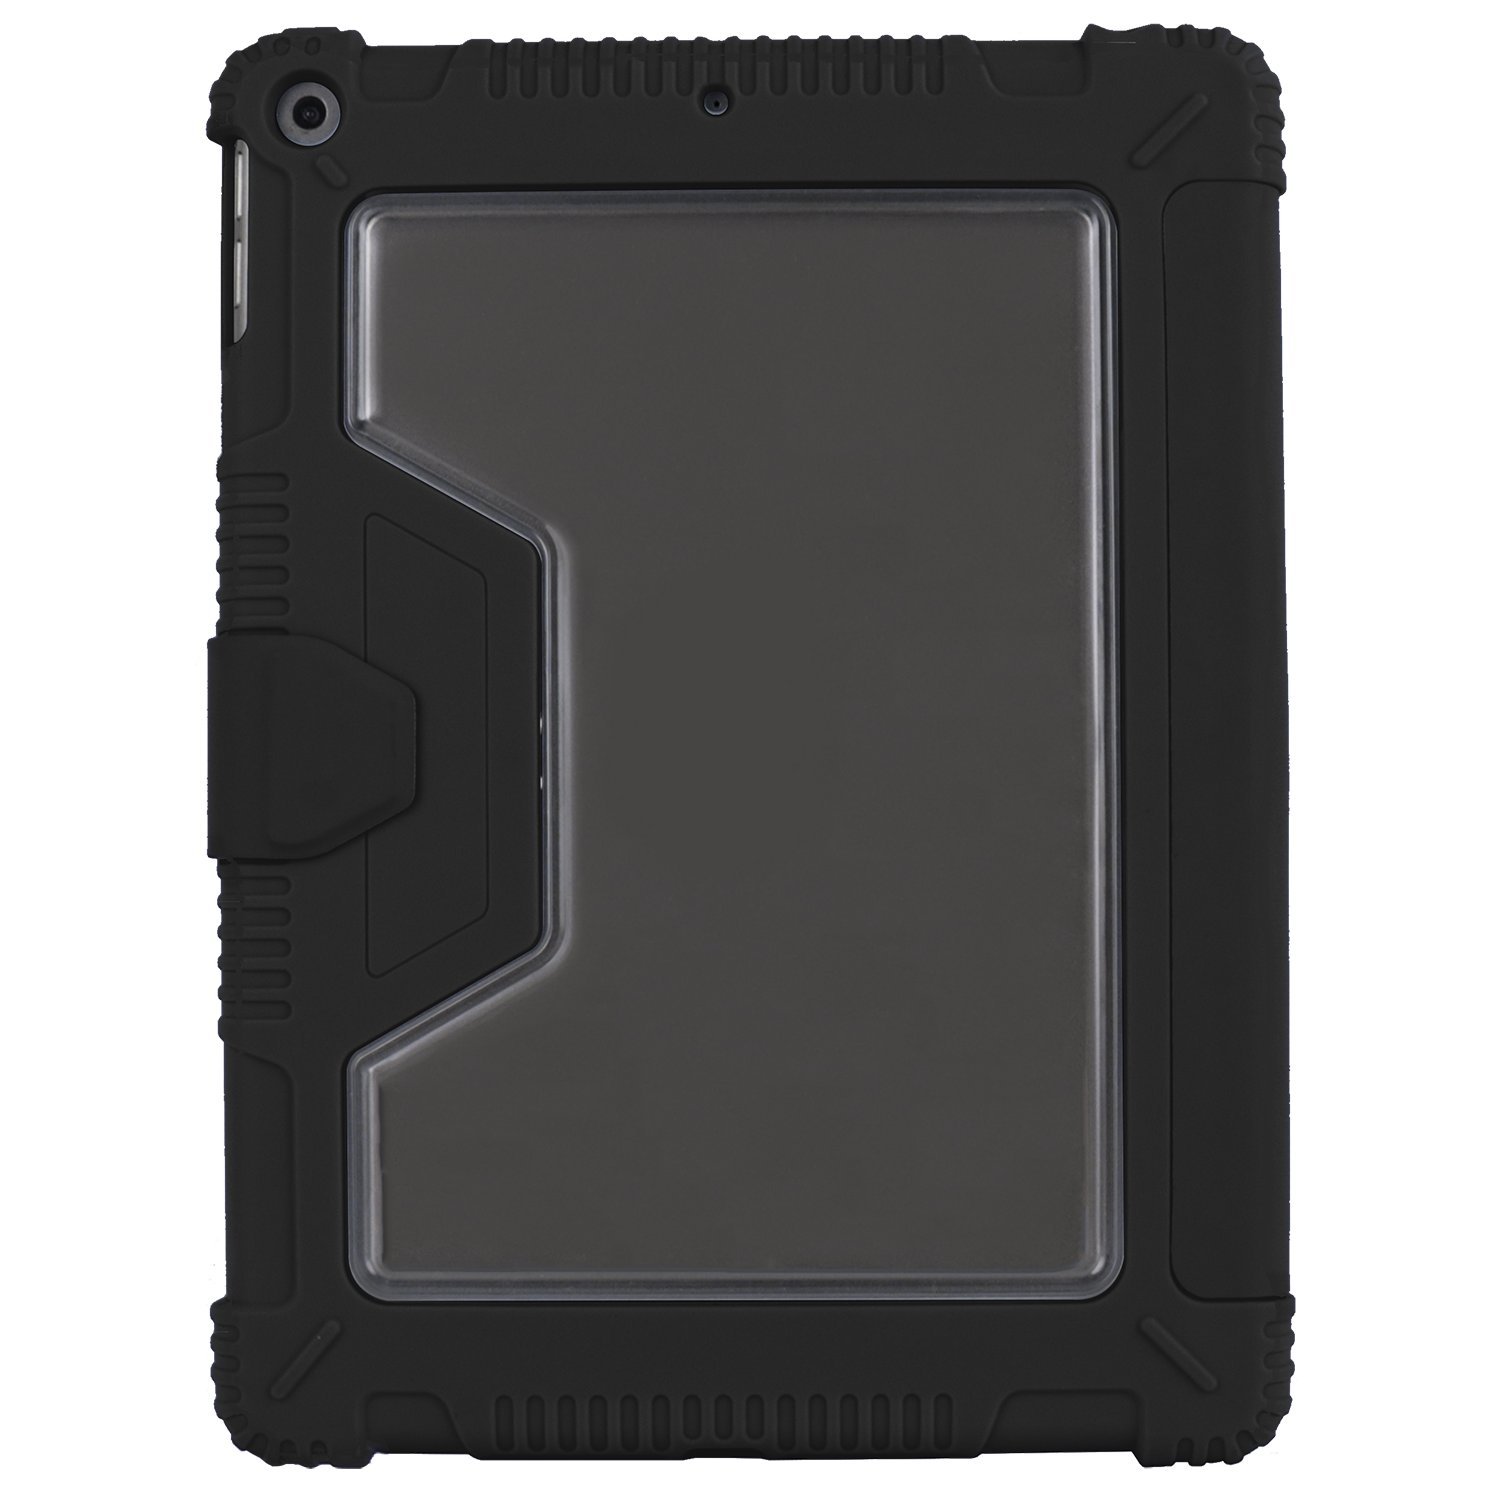 TechXtras Shock Absorbent 10.2" Tablet Case - Black